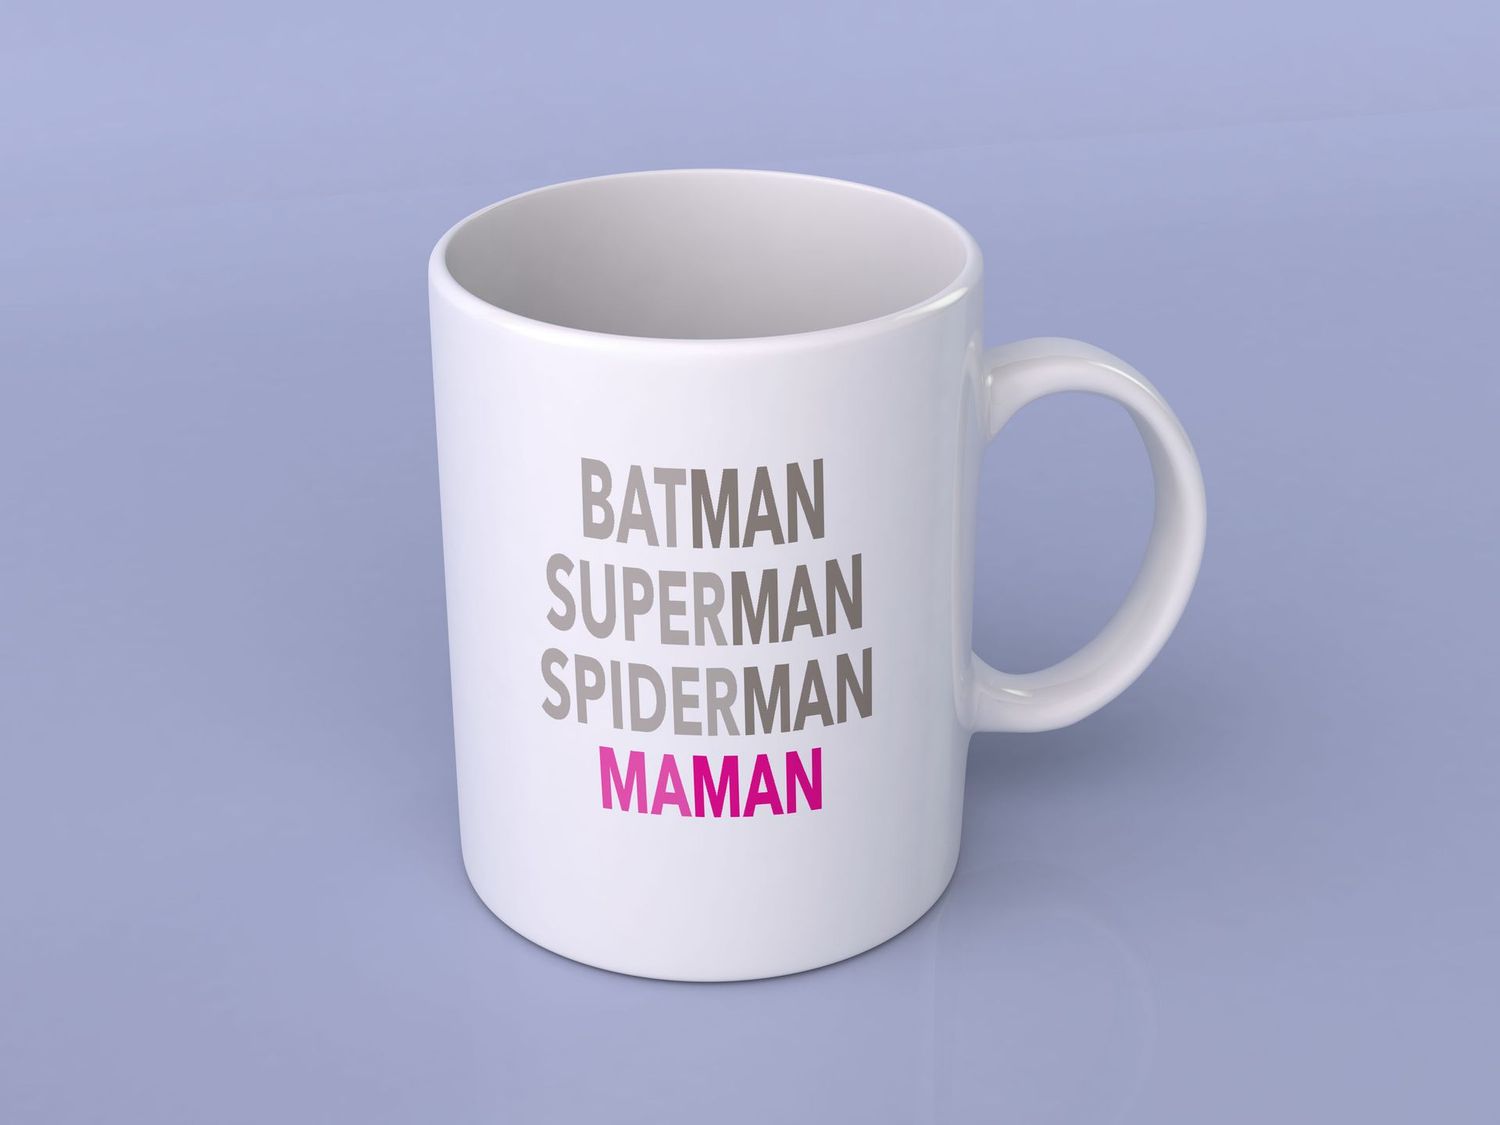 Mug "Batman, Superman, Spiderman, Maman"